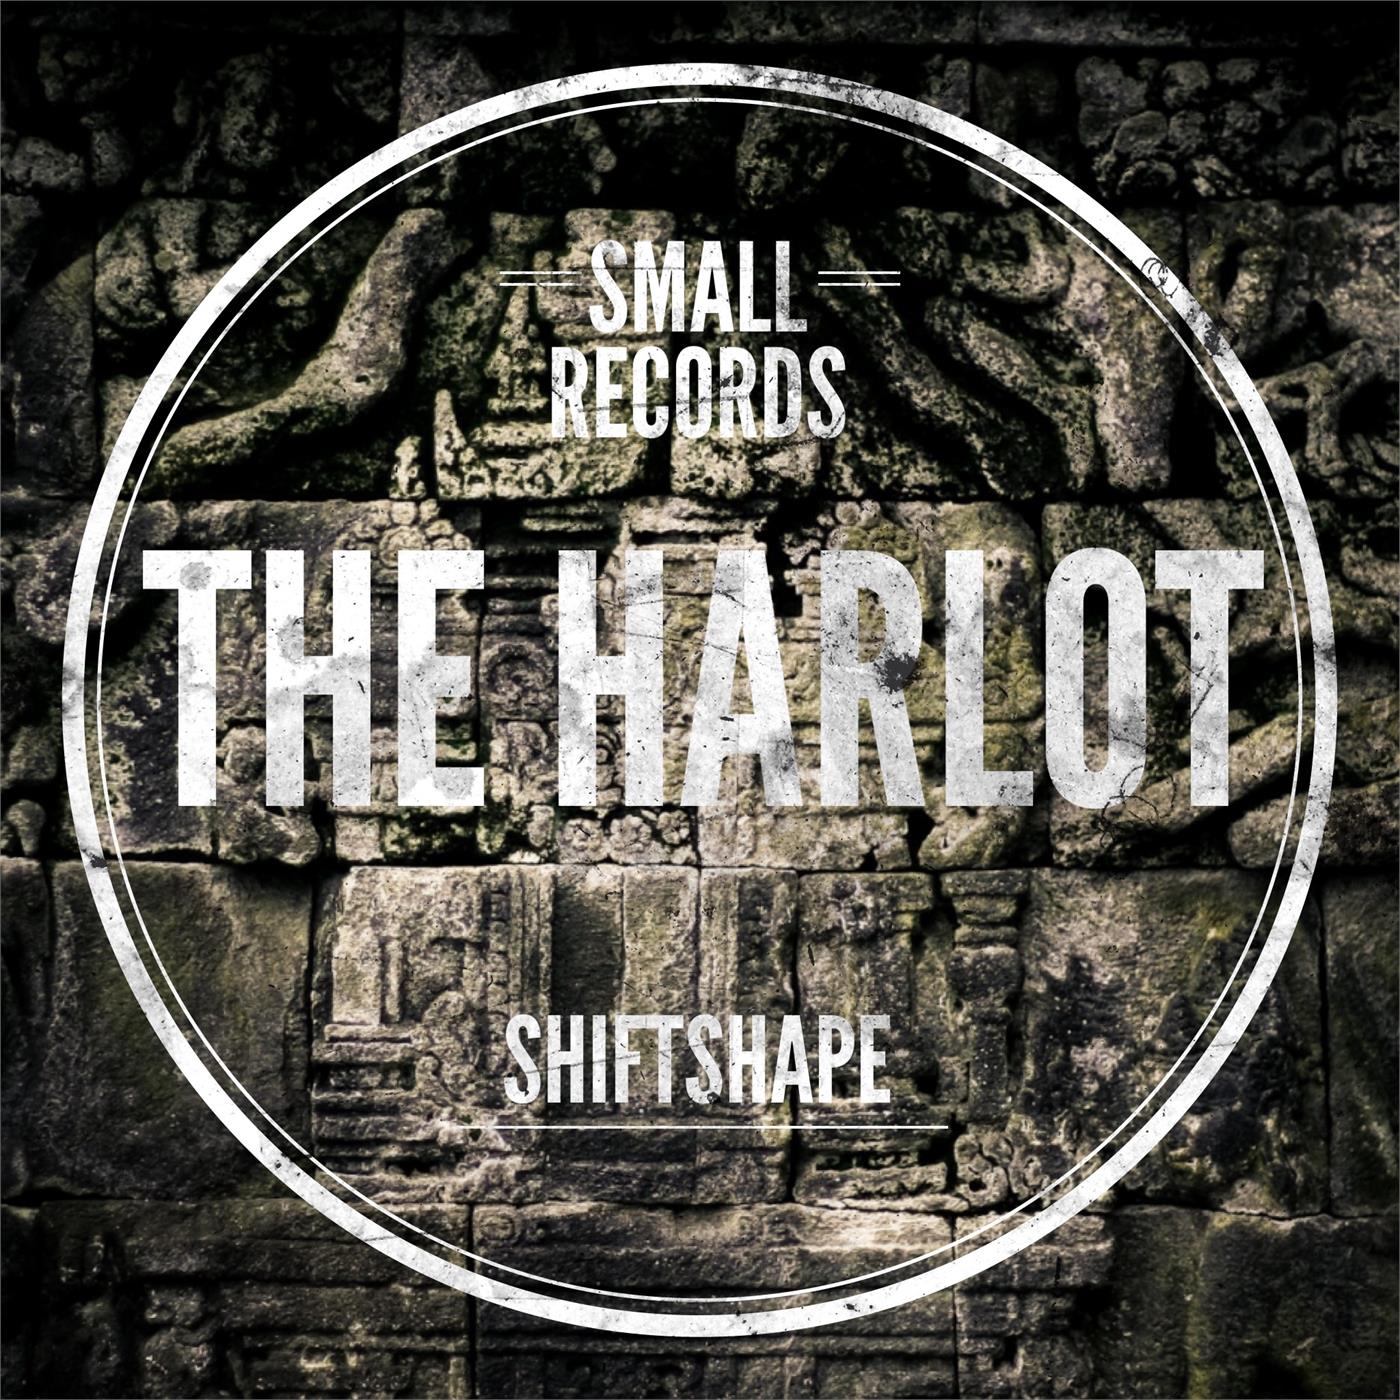 The Harlot EP